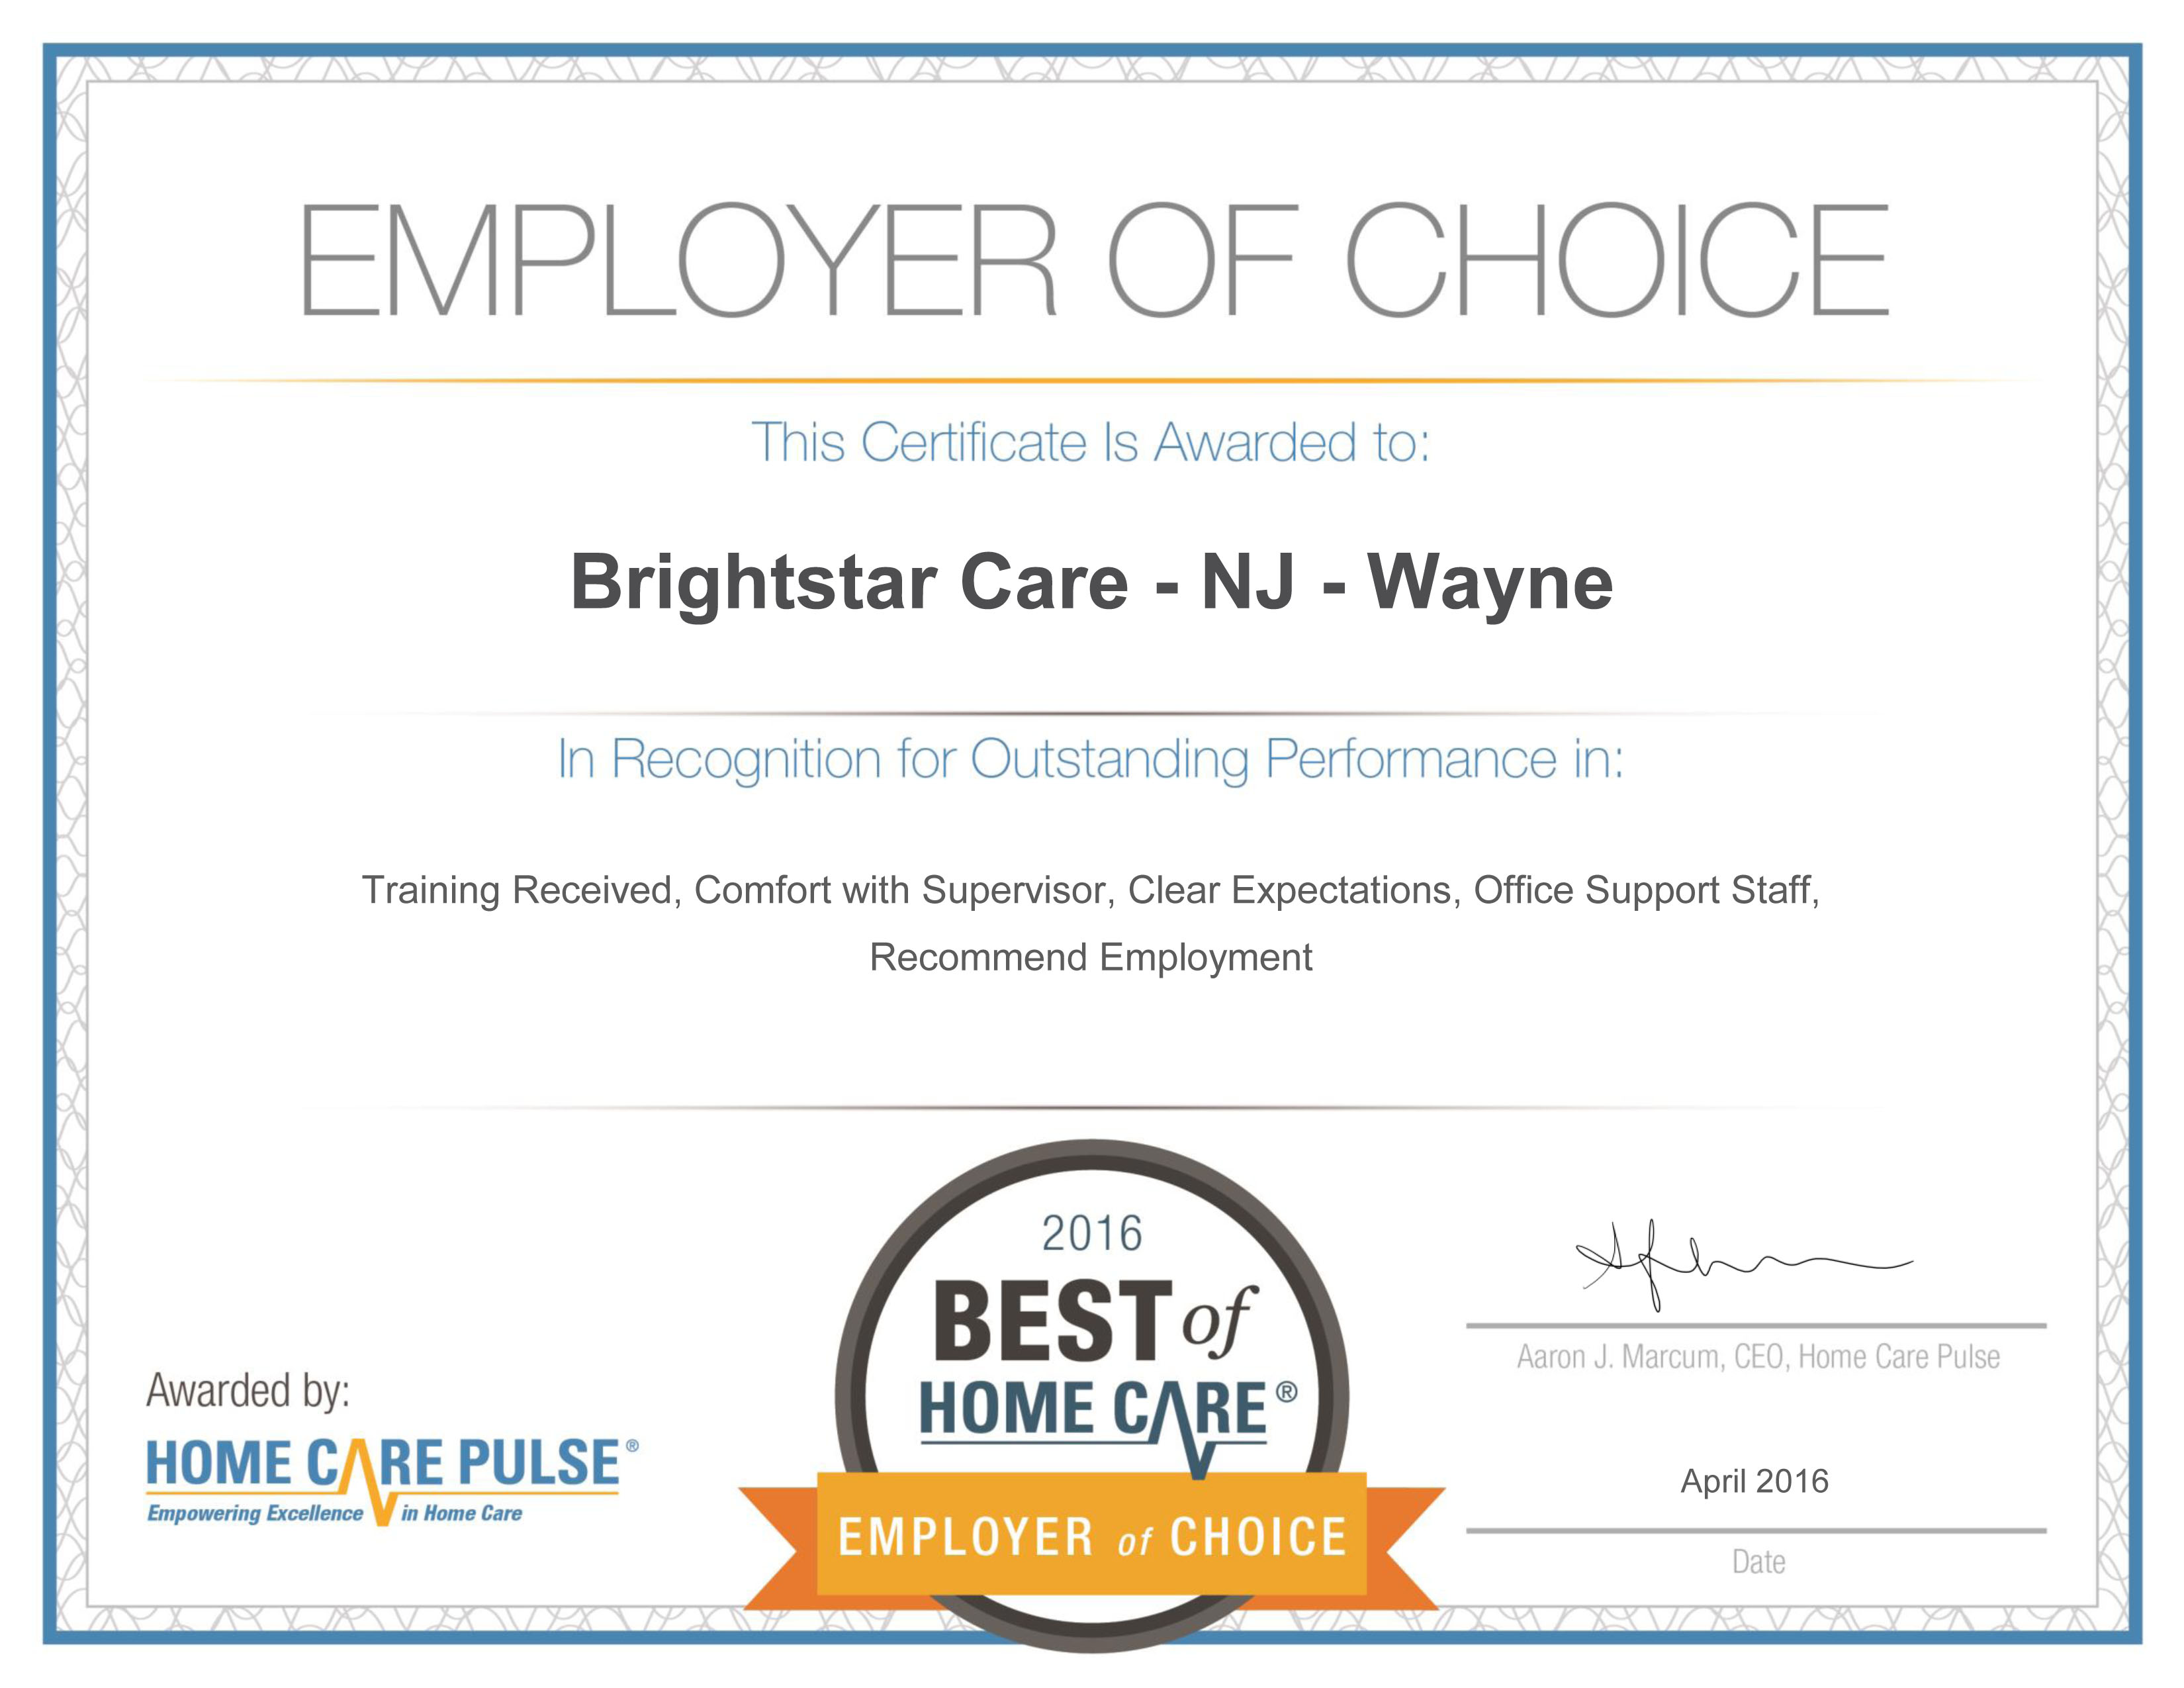 EOC Brightstar Care - NJ - Wayne